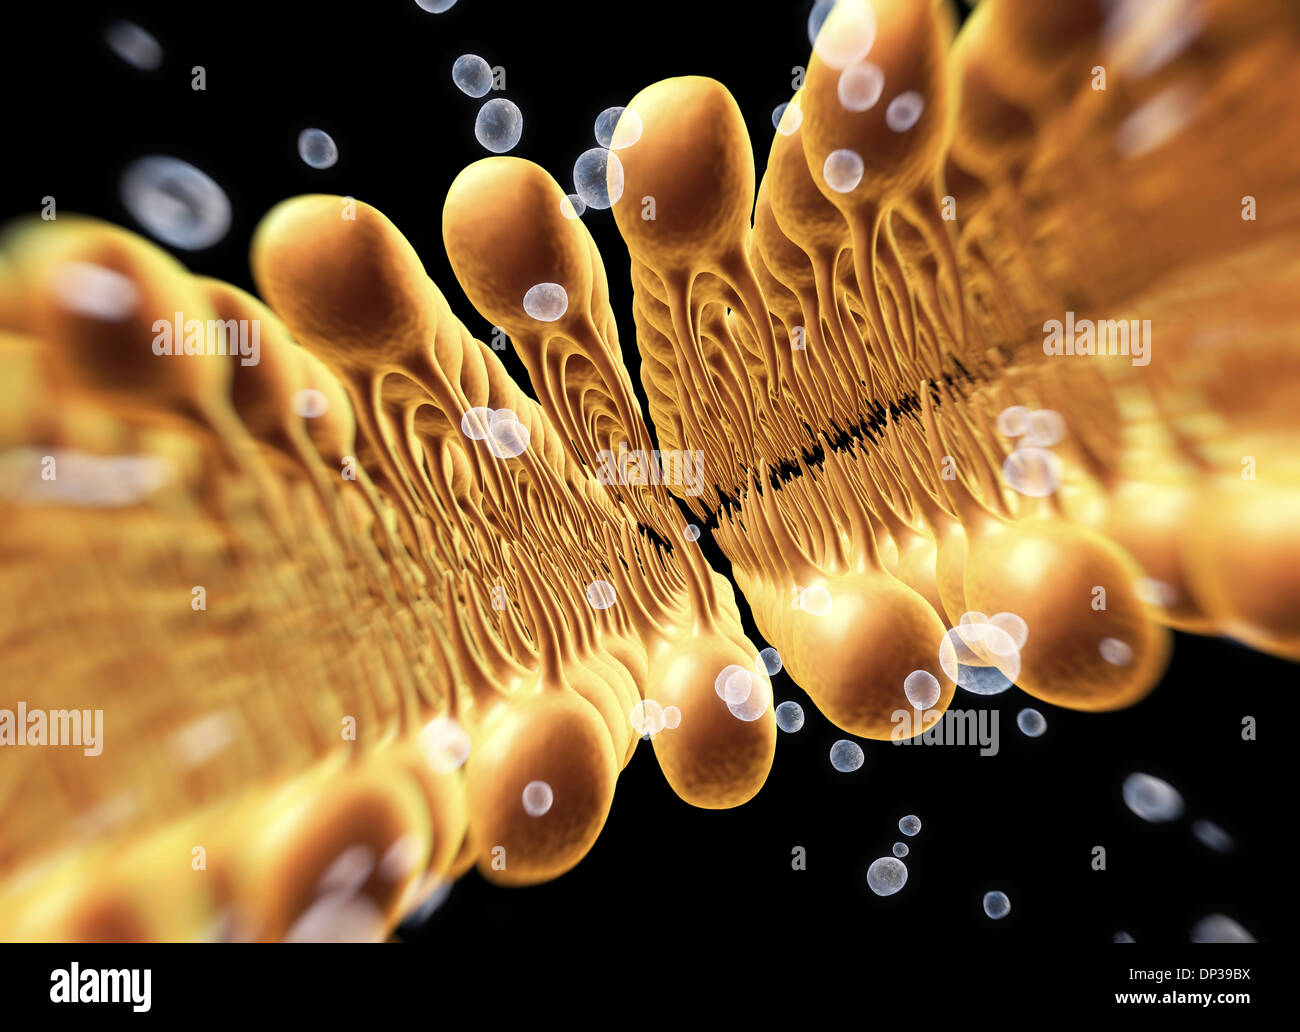 Zellmembran Lipid Bilayer, artwork Stockfoto